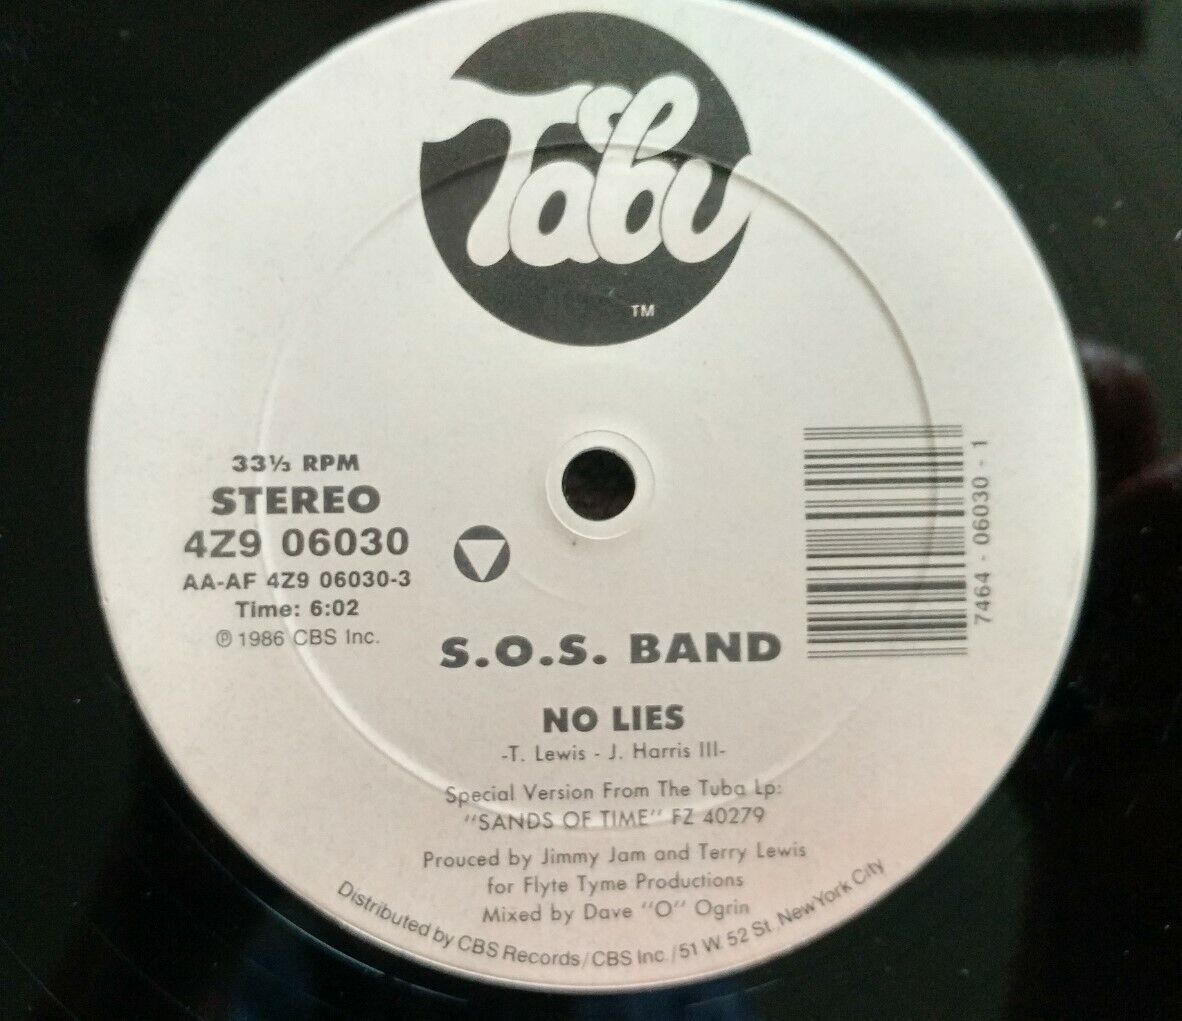 S.O.S. Band - No Lies - Tabu  4Z9 06030 yr 1986 12" Funk, Disco, Boogie